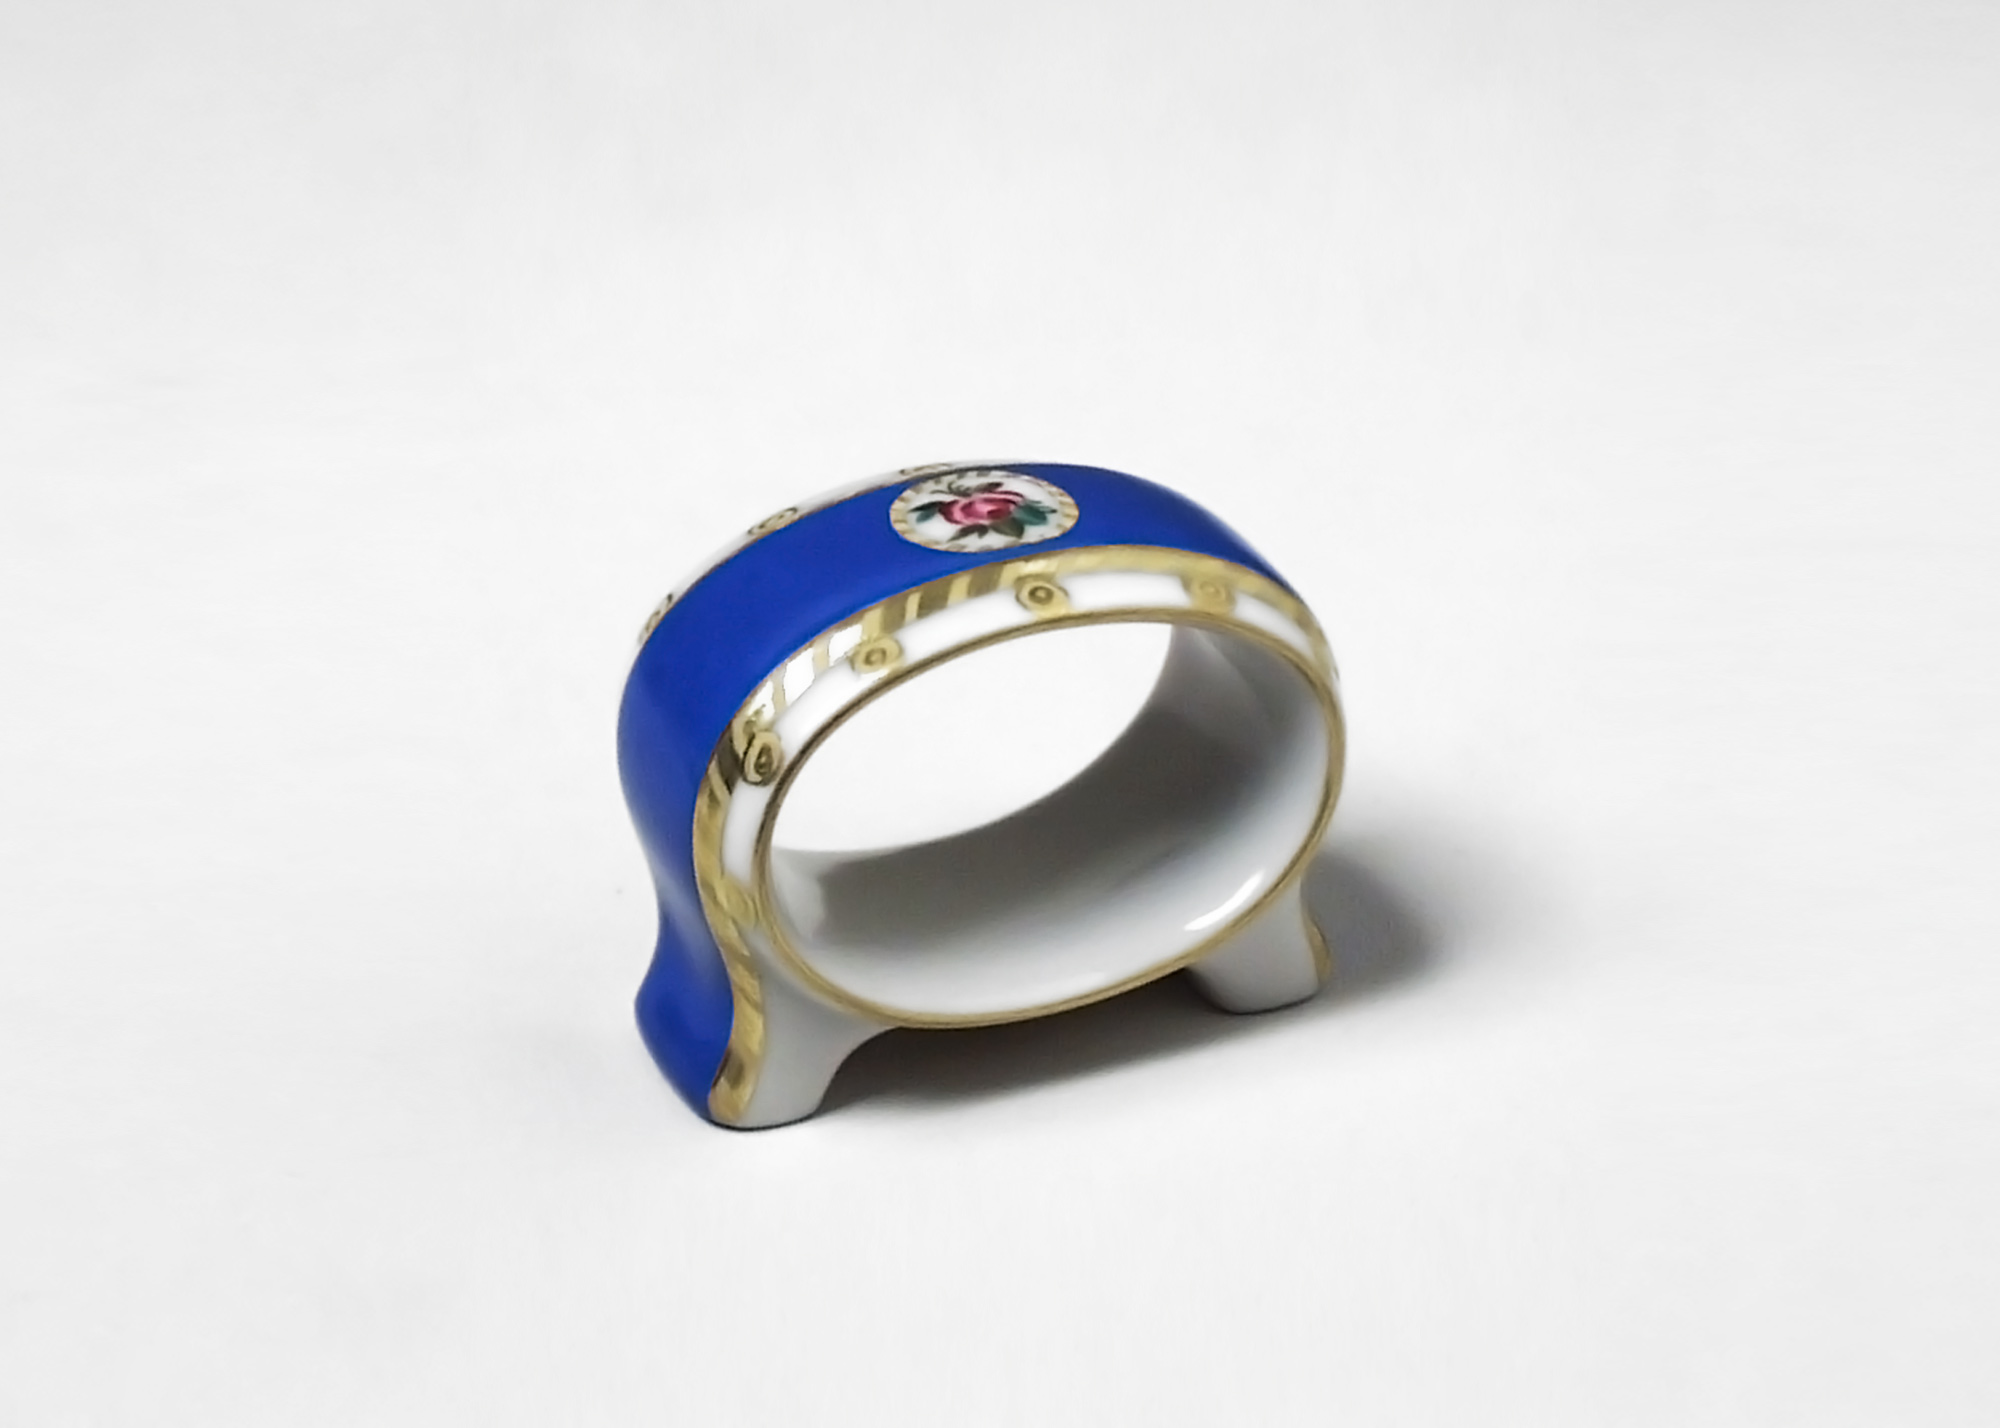 Buy Anastasia Napkin ring at GoldenCockerel.com